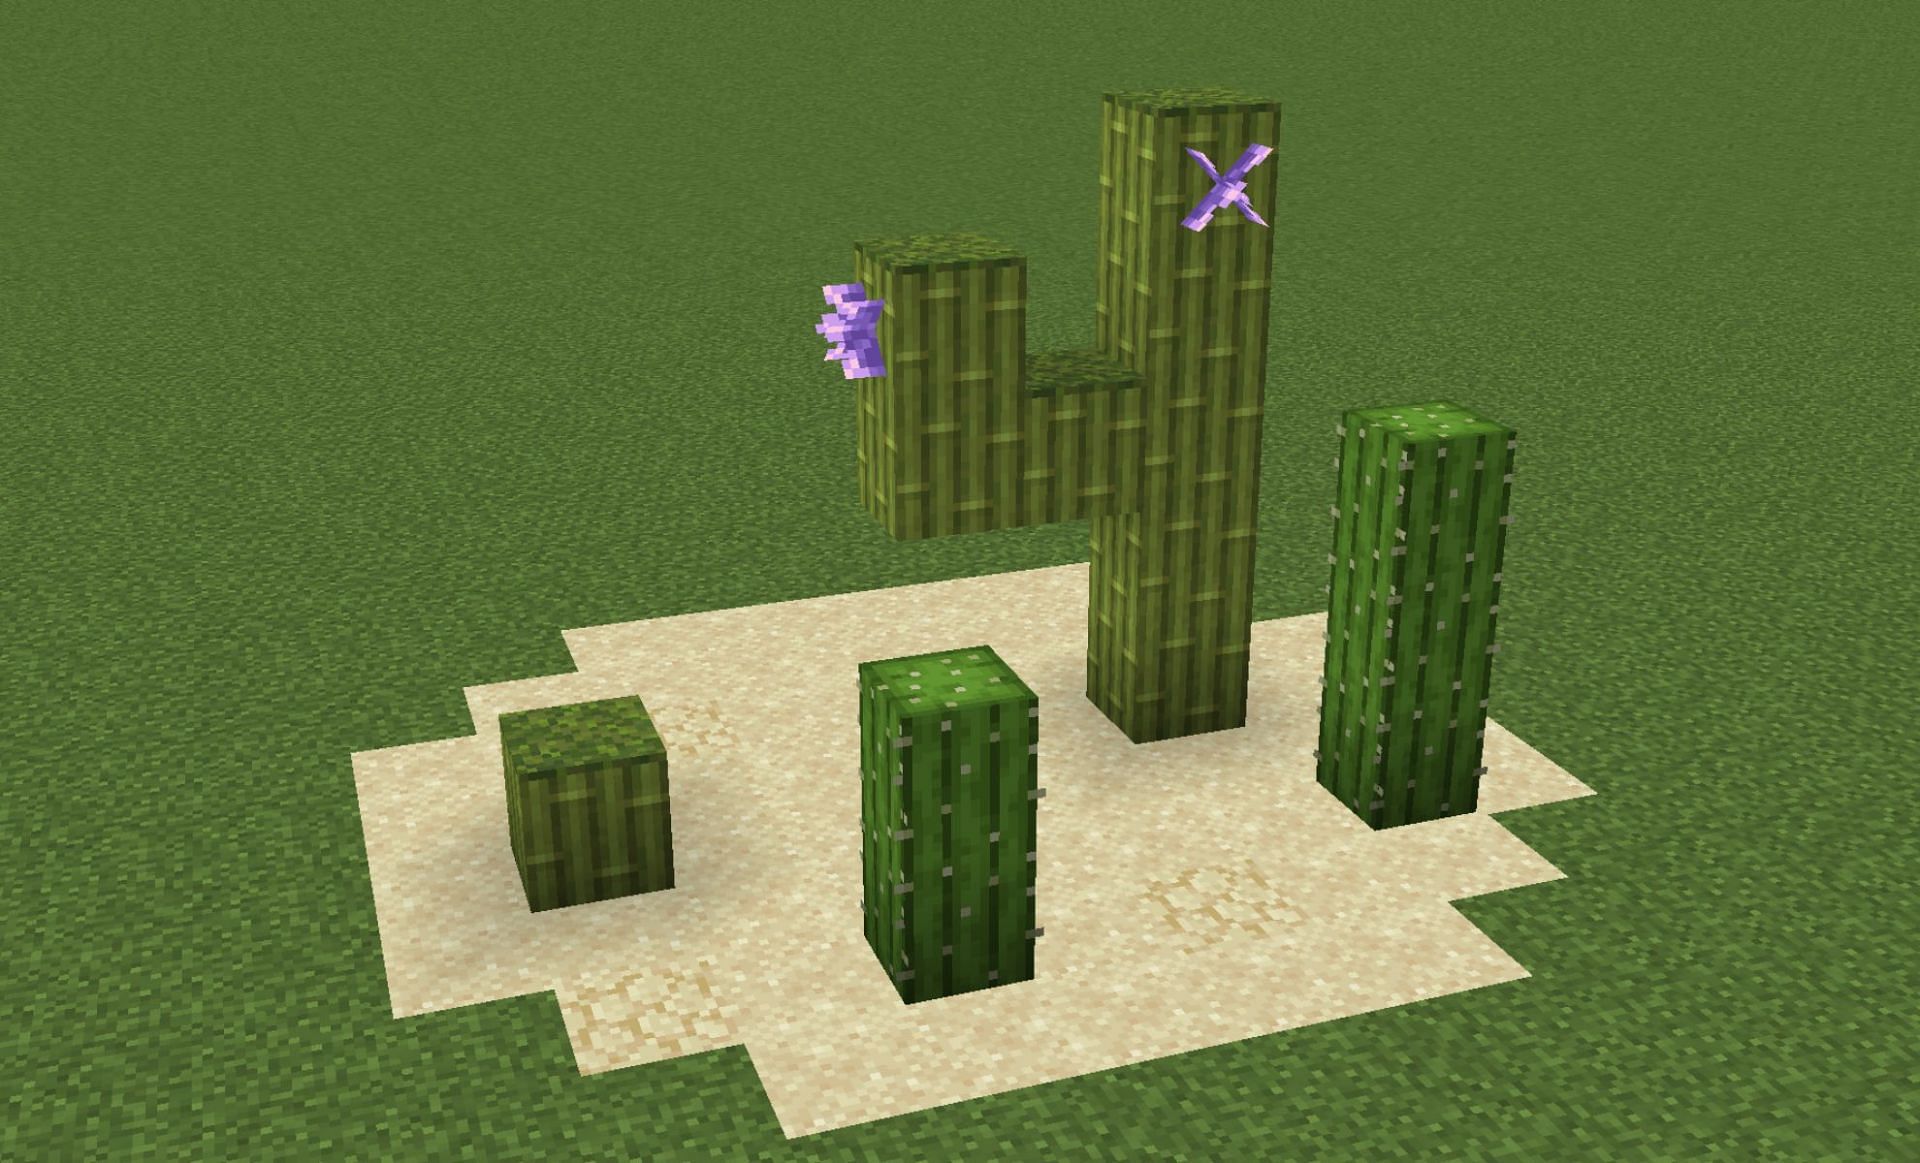 Bamboo blocks as a fake cactus (Image via u/ImportedParmesan on Reddit)